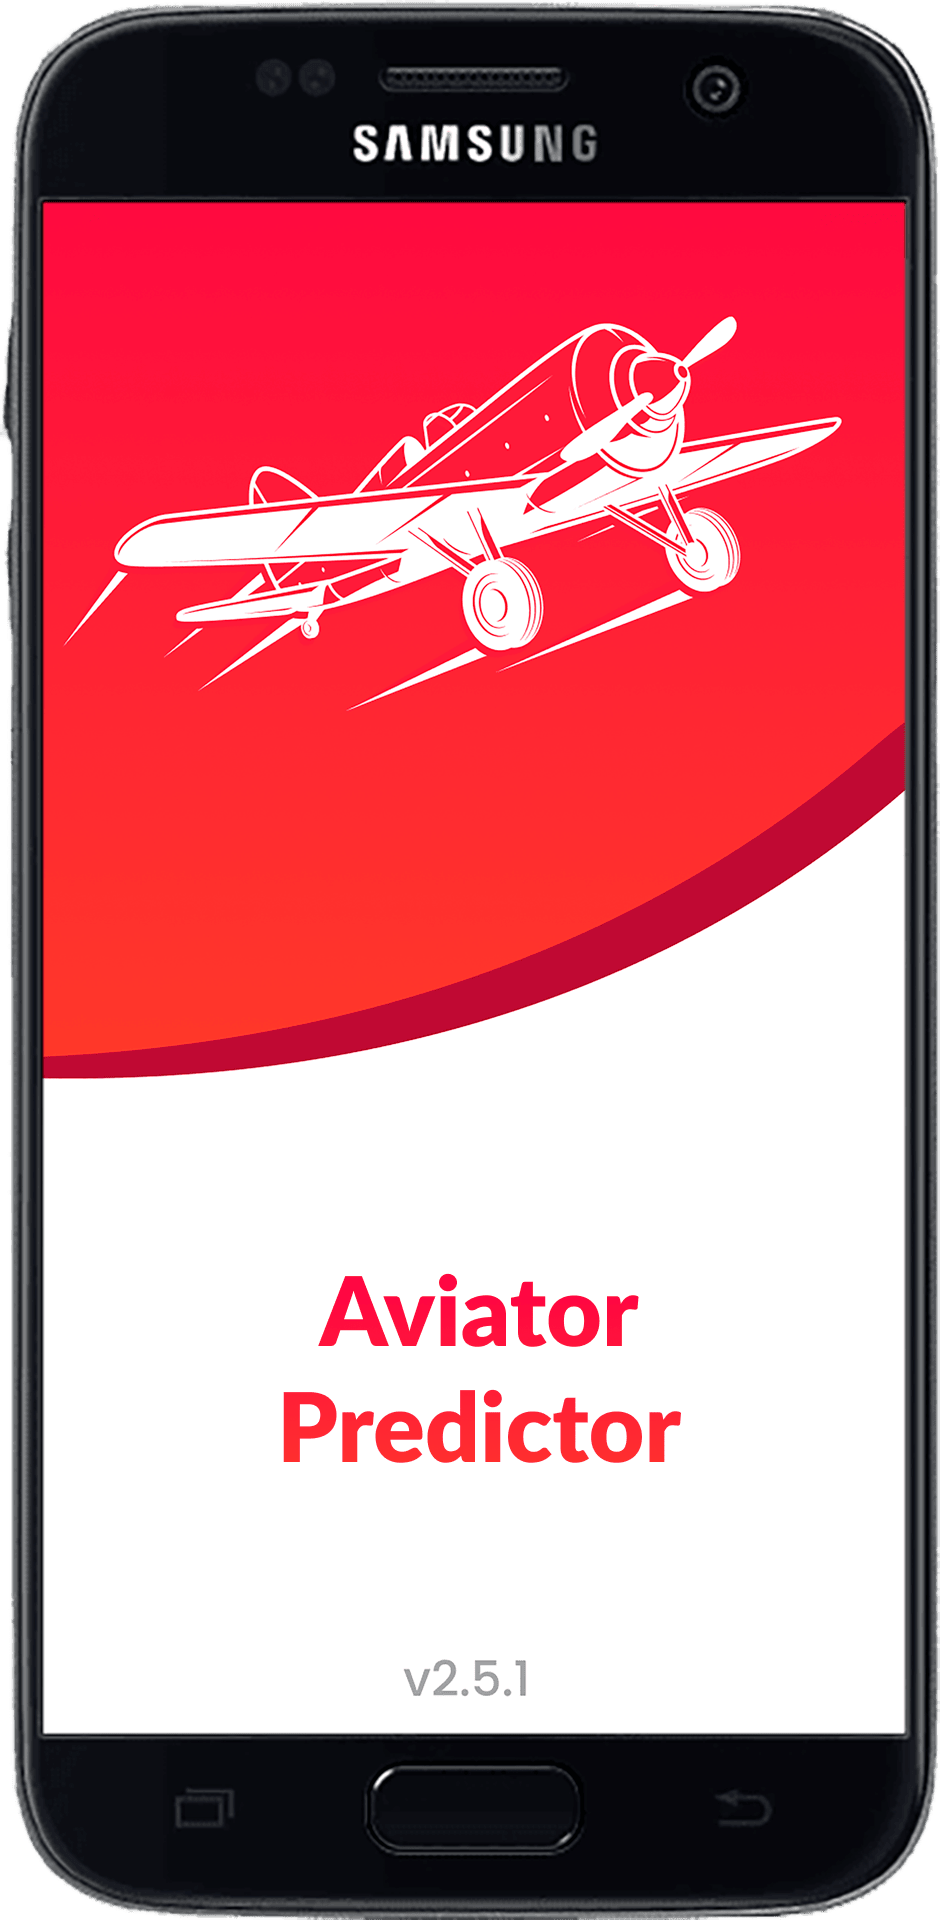 Aviator Predictor hack